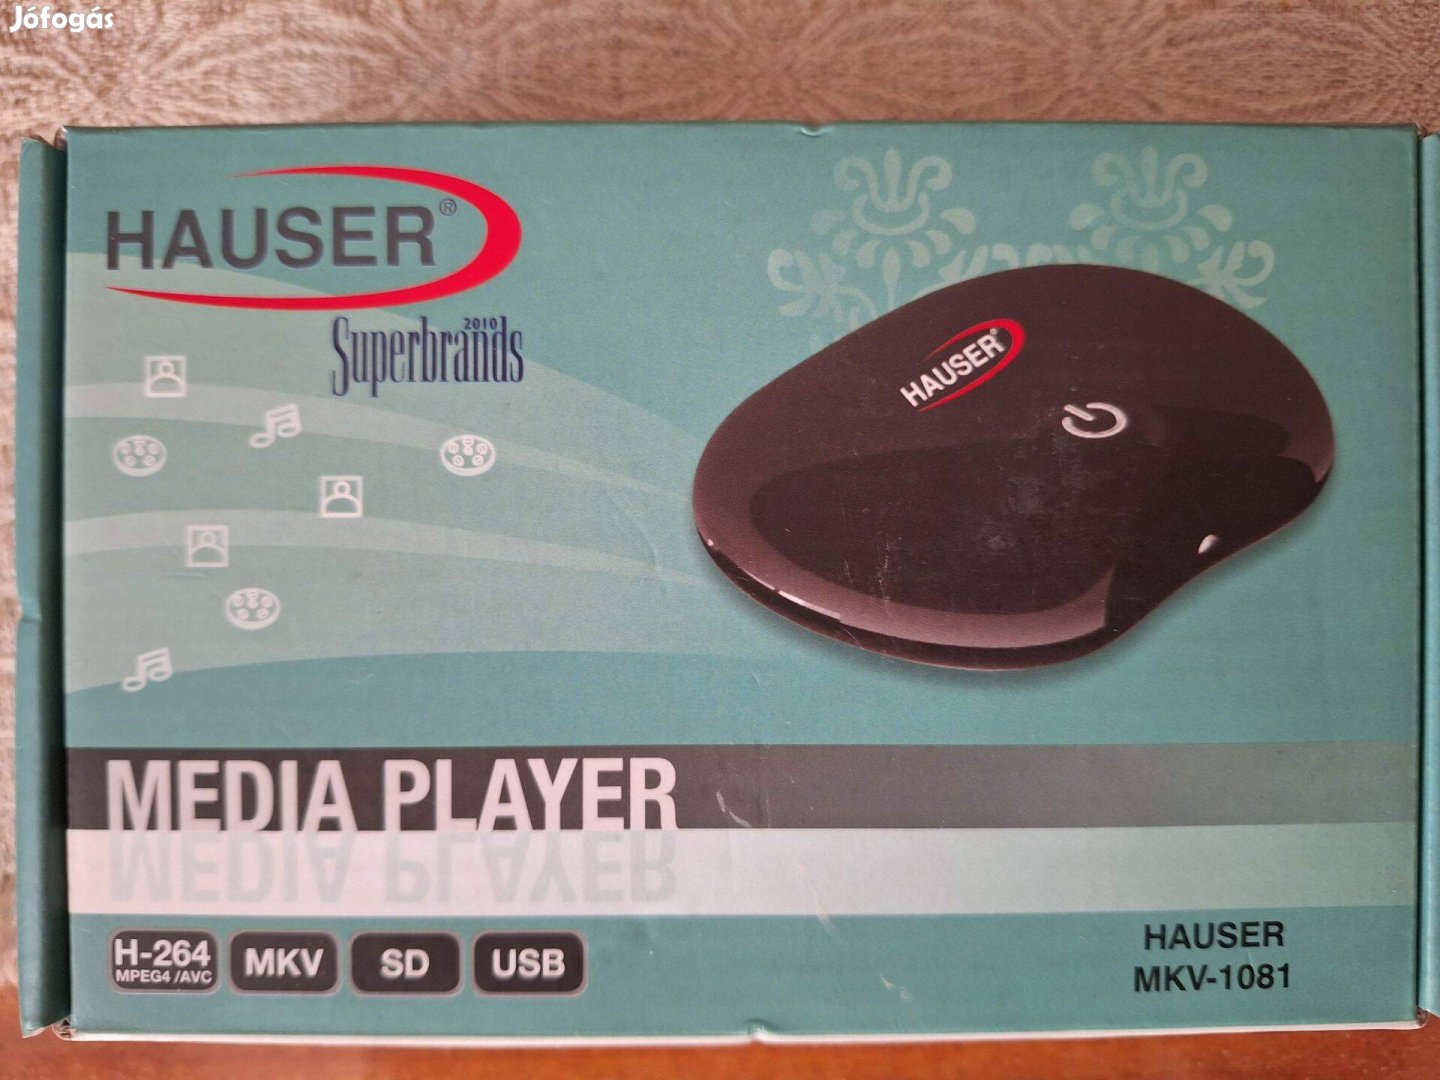 Hauser media player h264